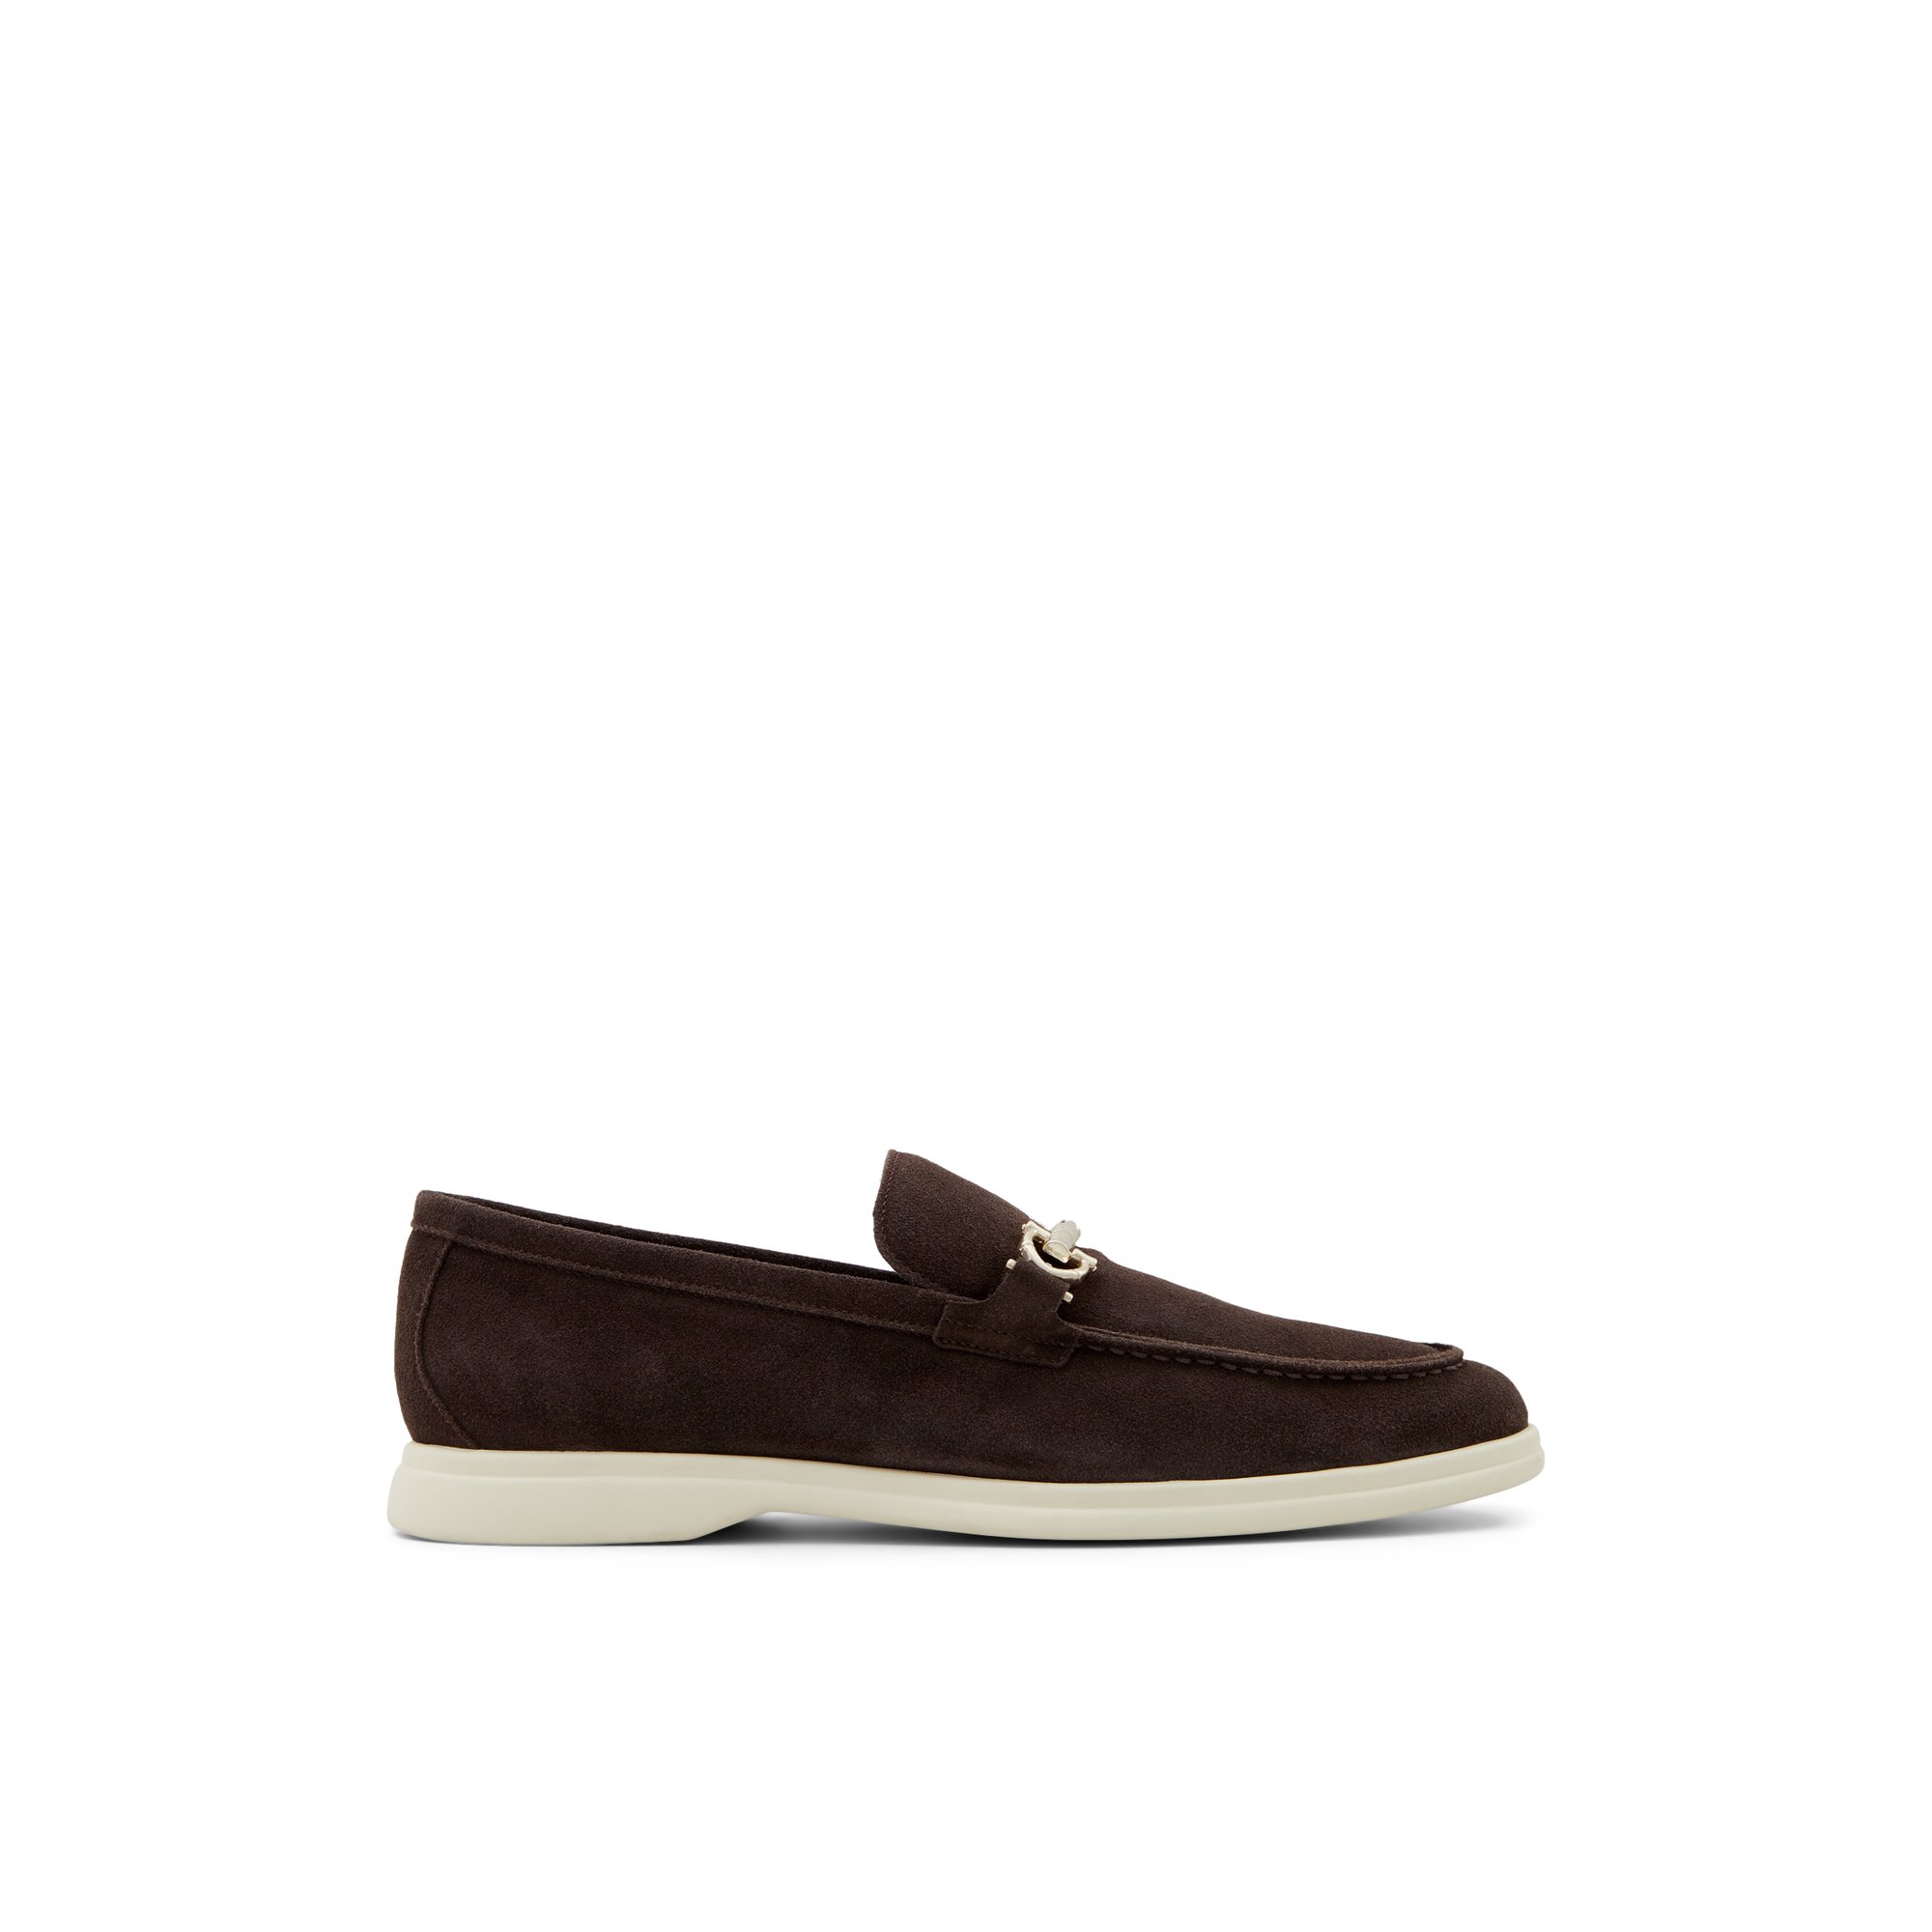 ALDO Regi - Men's Casual Shoes - Brown